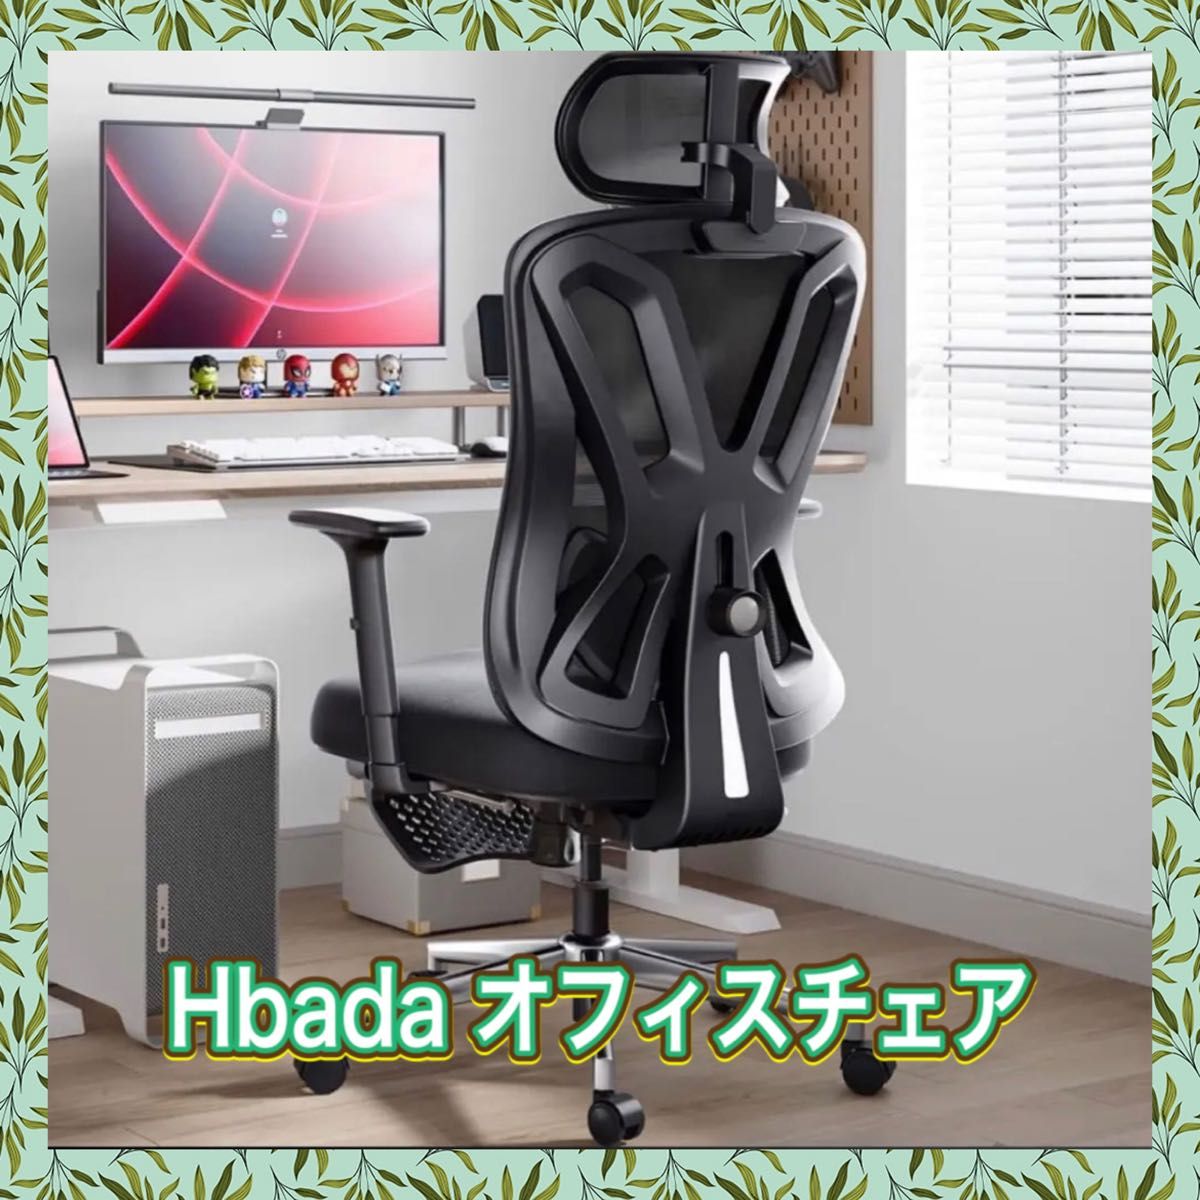 Hbada オフィスチェア デスクチェア 椅子 チェア 2Dランバーサポート